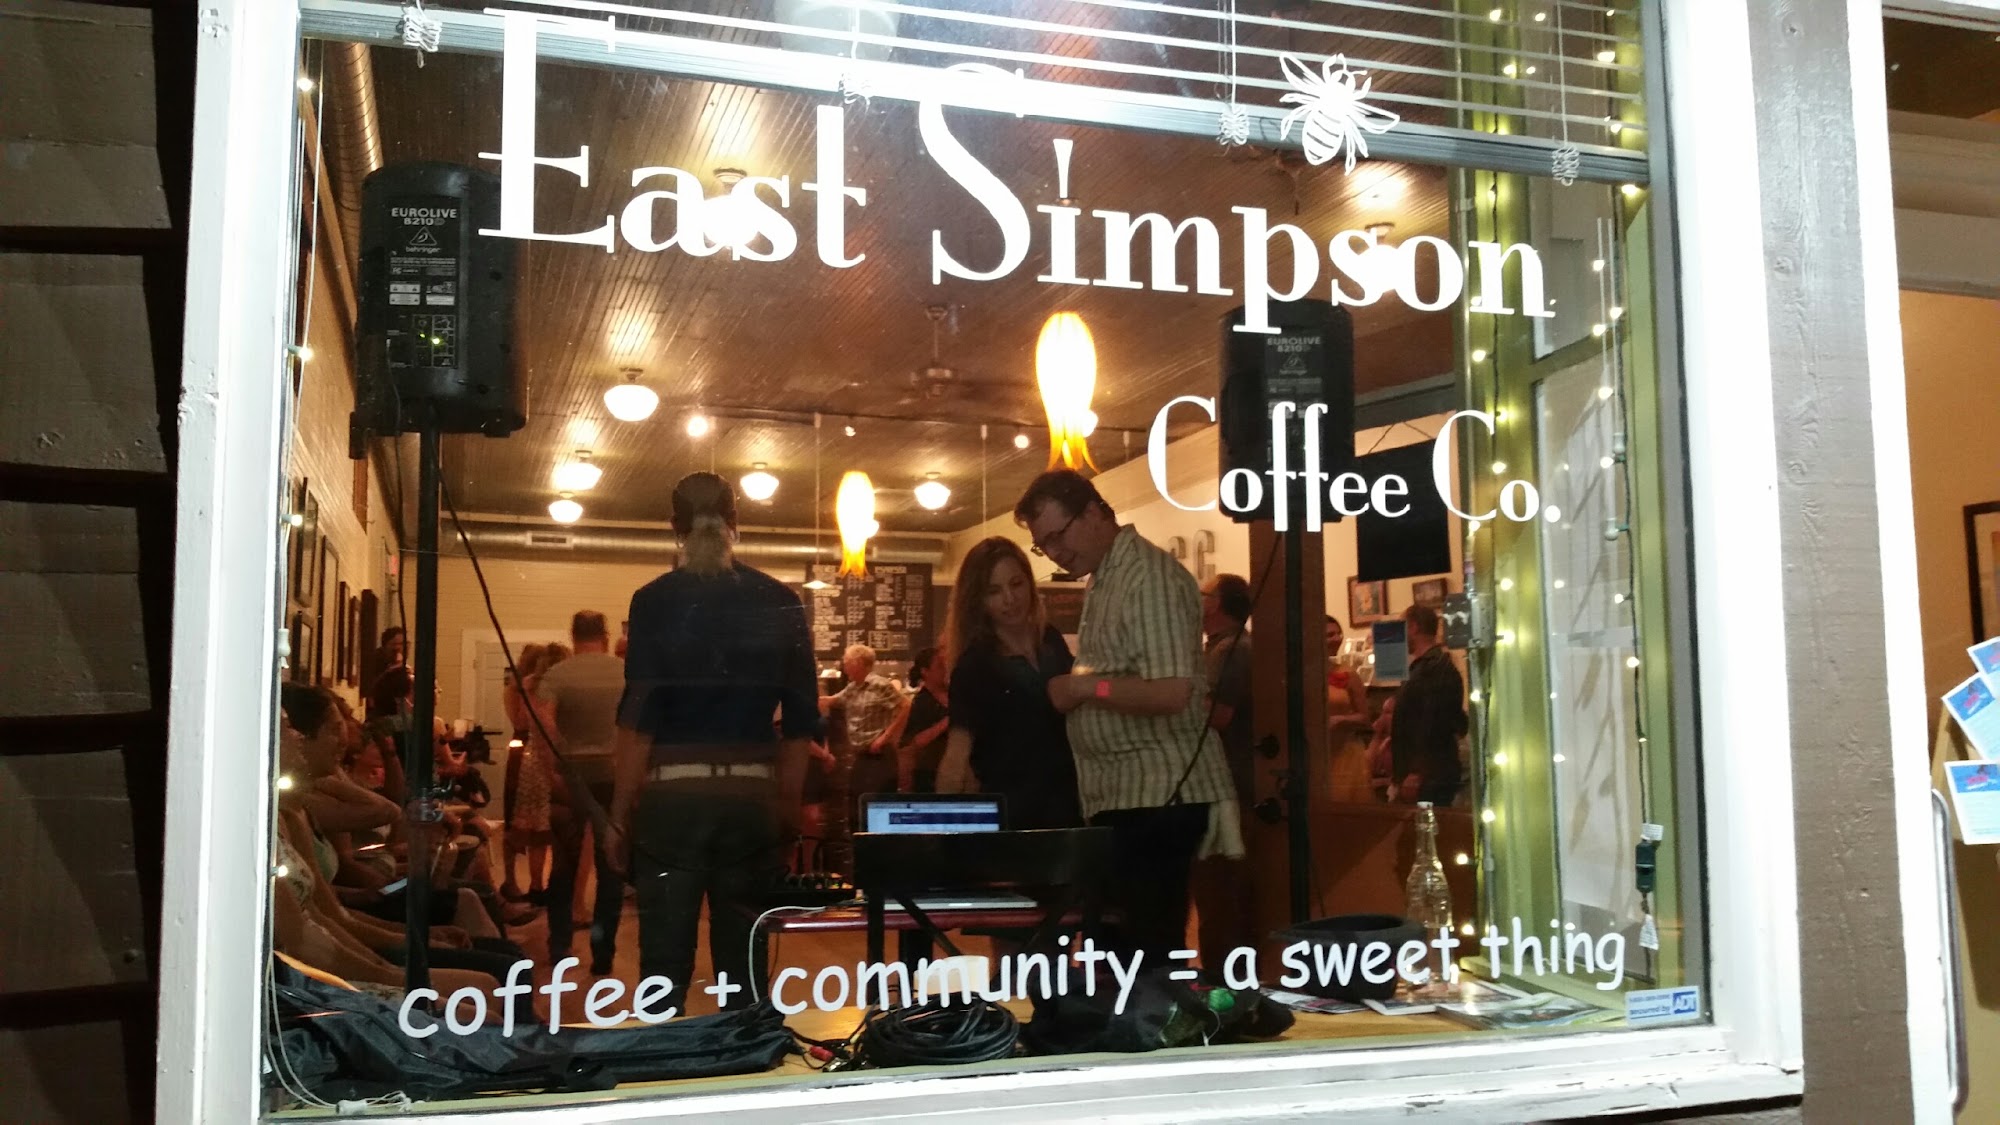 East Simpson Coffee Company